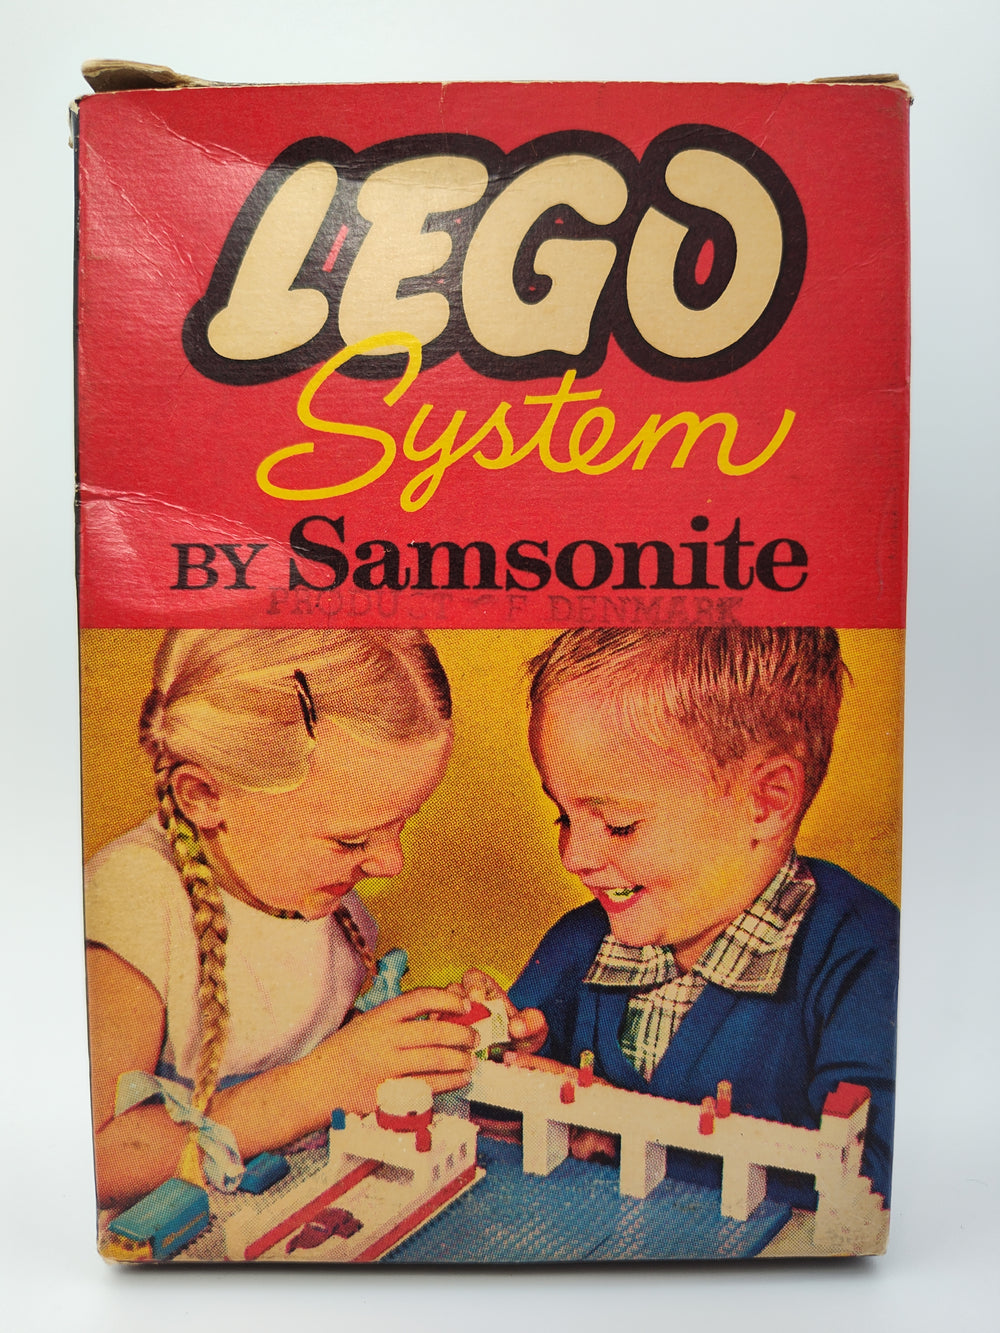 Set 233-1 Samsonite, Light Masts Building Kit LEGO®   